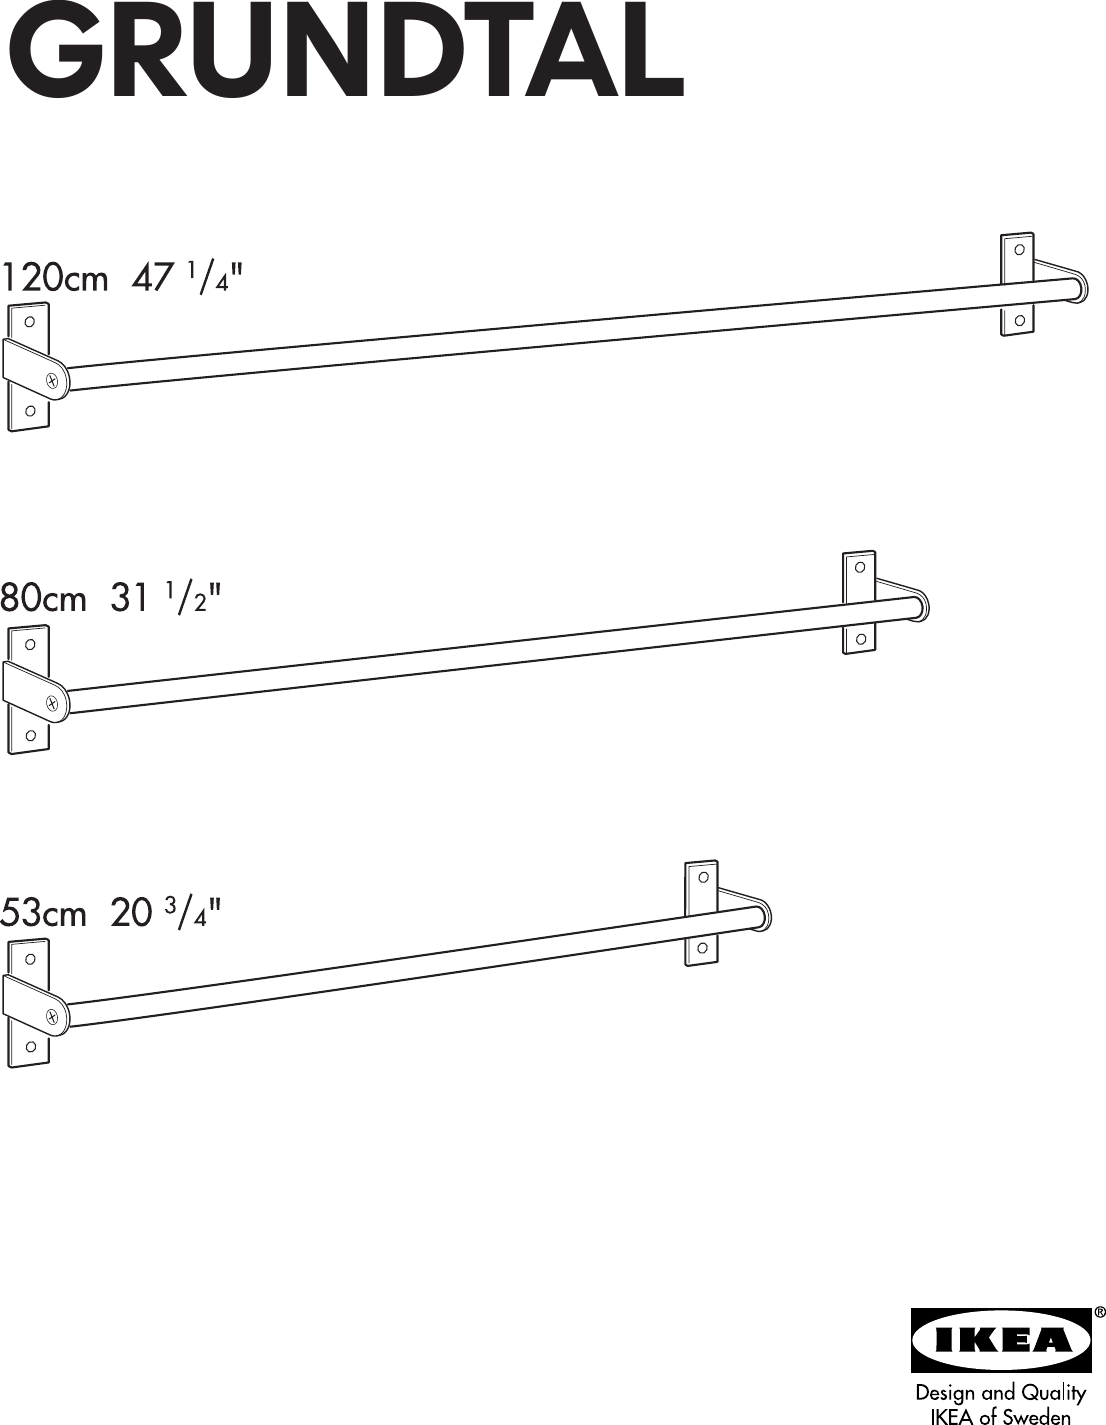 Page 1 of 4 - Ikea Ikea-Grundtal-Rail-47-1-4-Assembly-Instruction